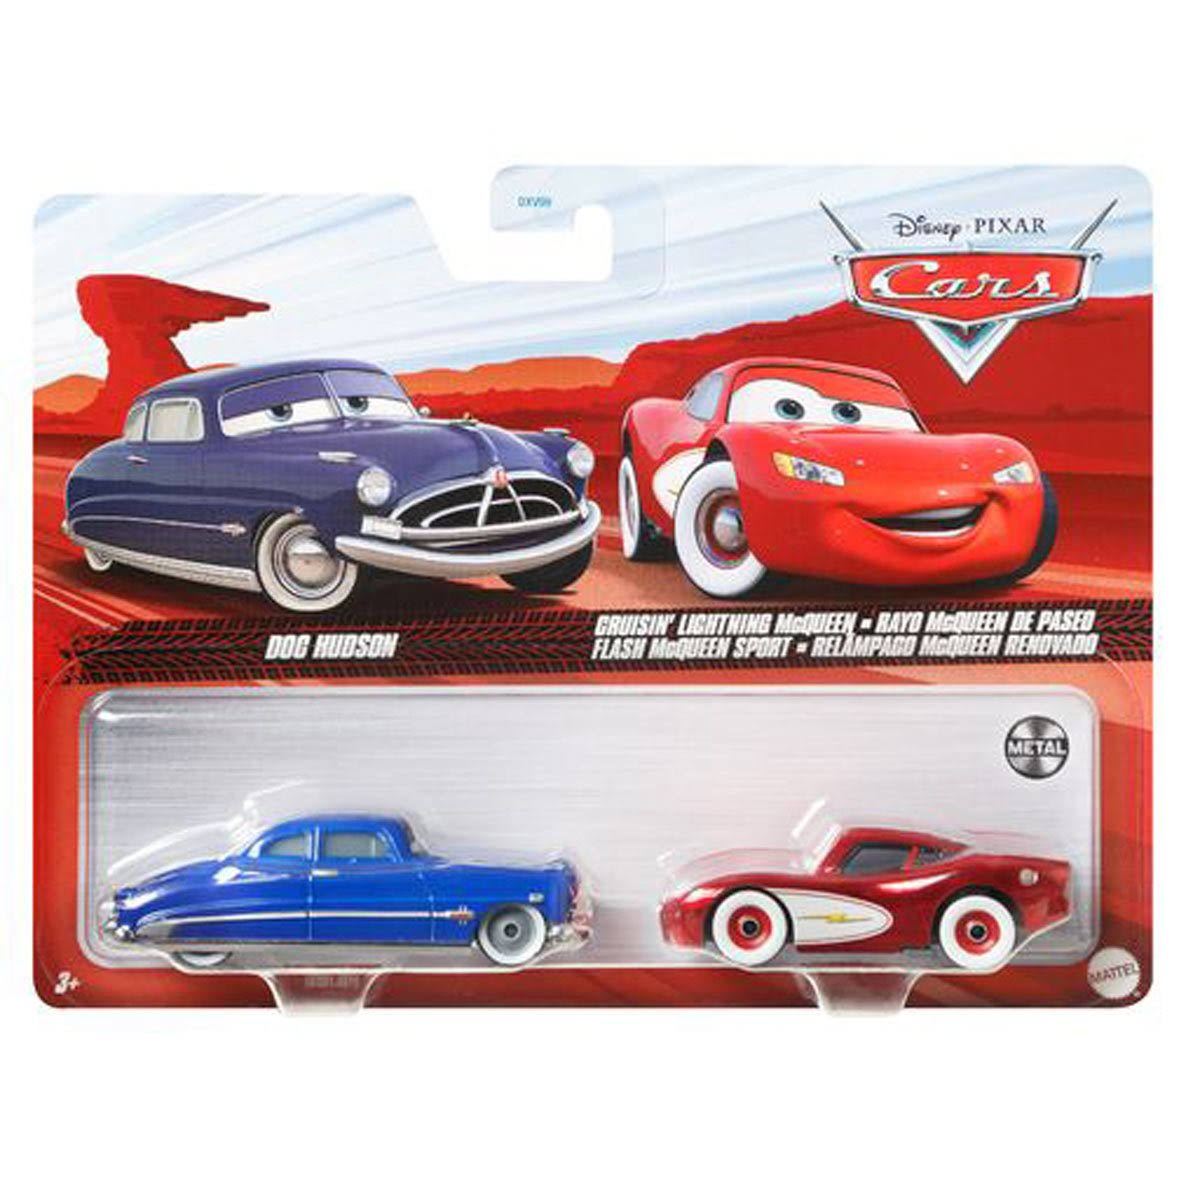 New Disney Pixar Cars Doc Hudson Cruisin' Lightning McQueen Same Day Shipping